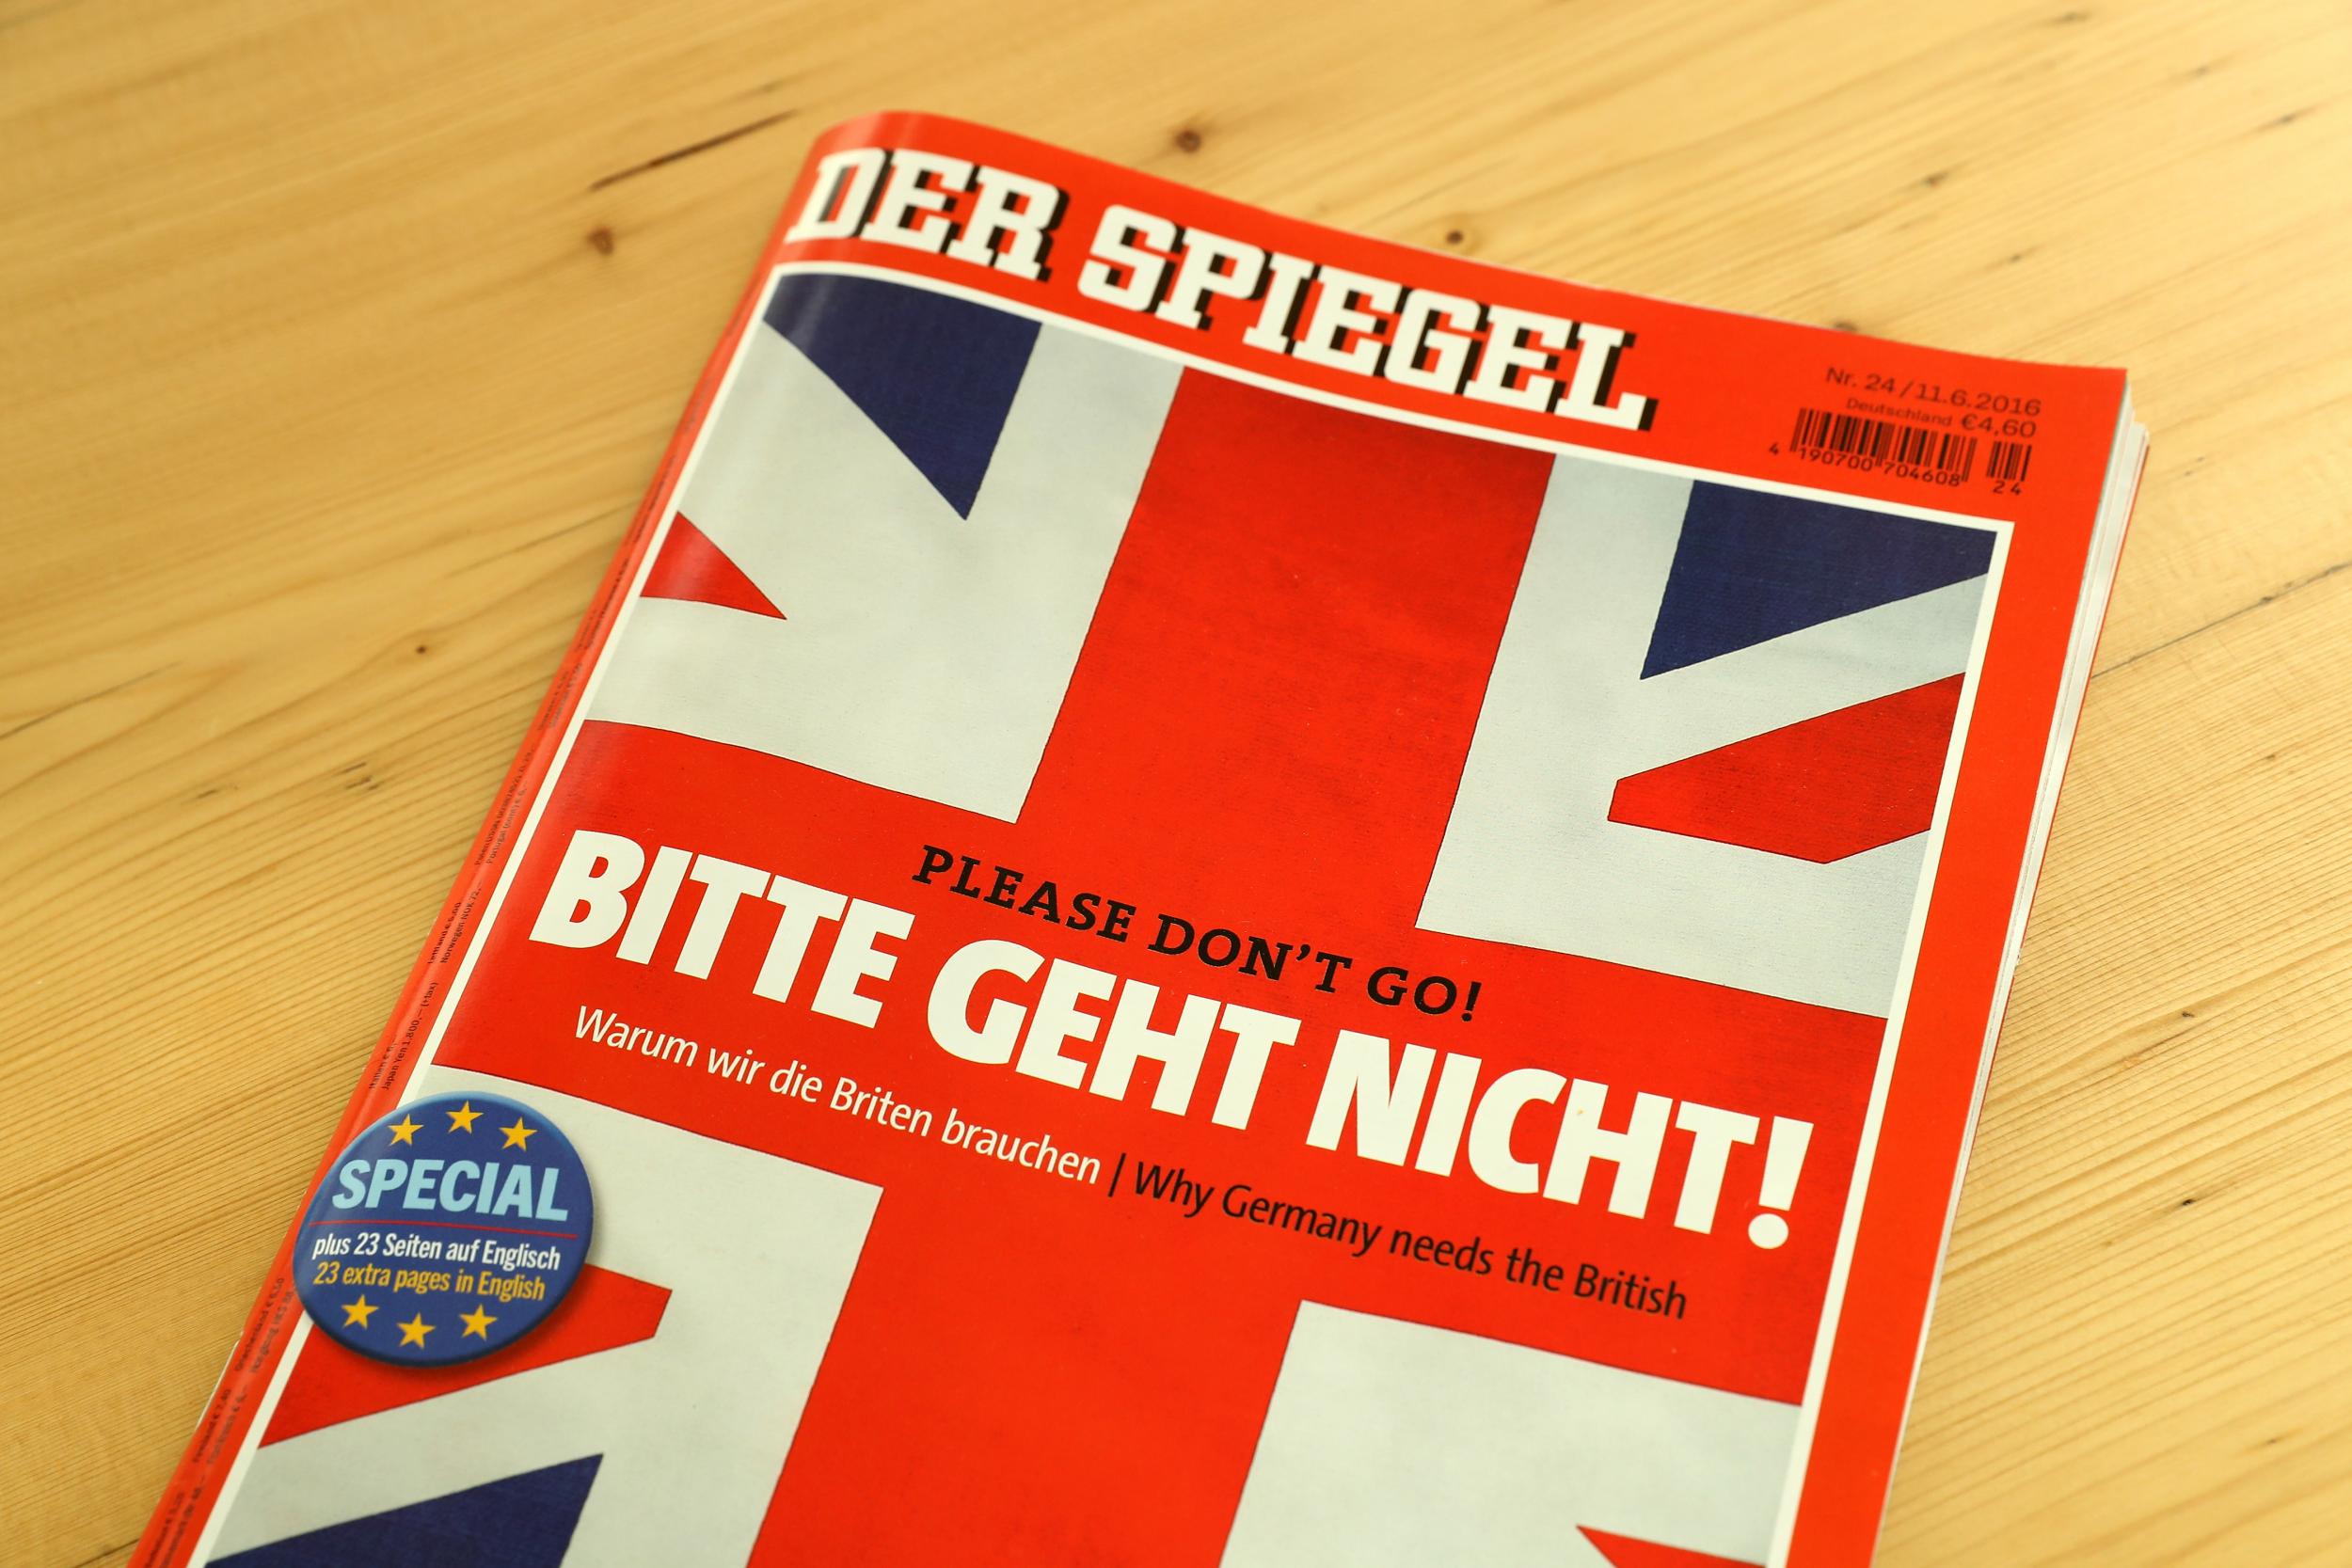 Der Spiegel with cover headline of 'Please don't go!'